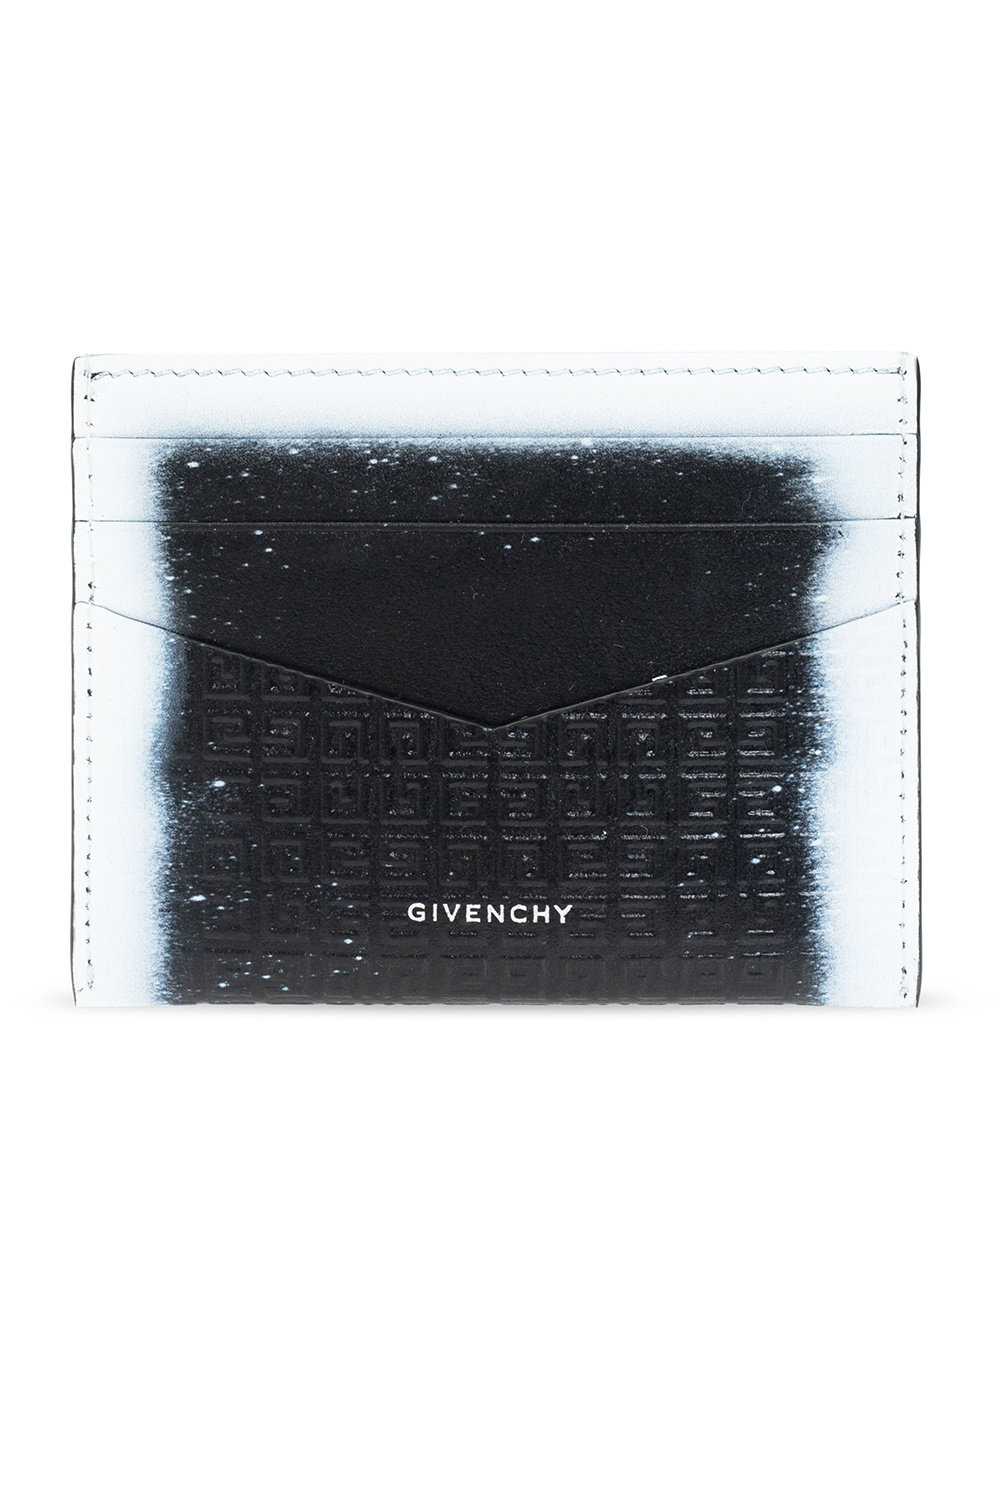 Givenchy GIVENCHY GV 7008 S AM3 53 Square Women Black Sunglasses Grey Lens